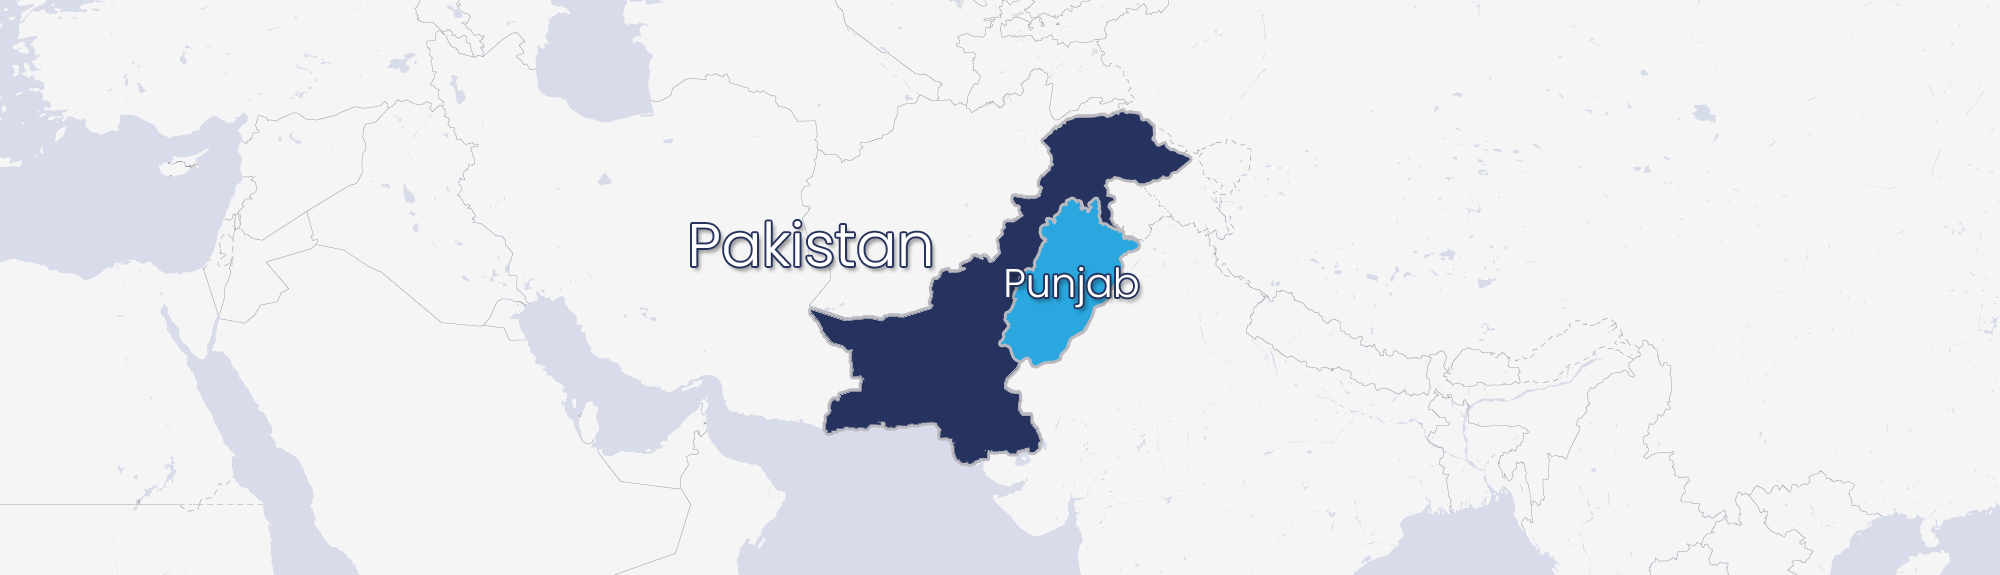 Map of Punjab, Pakistan